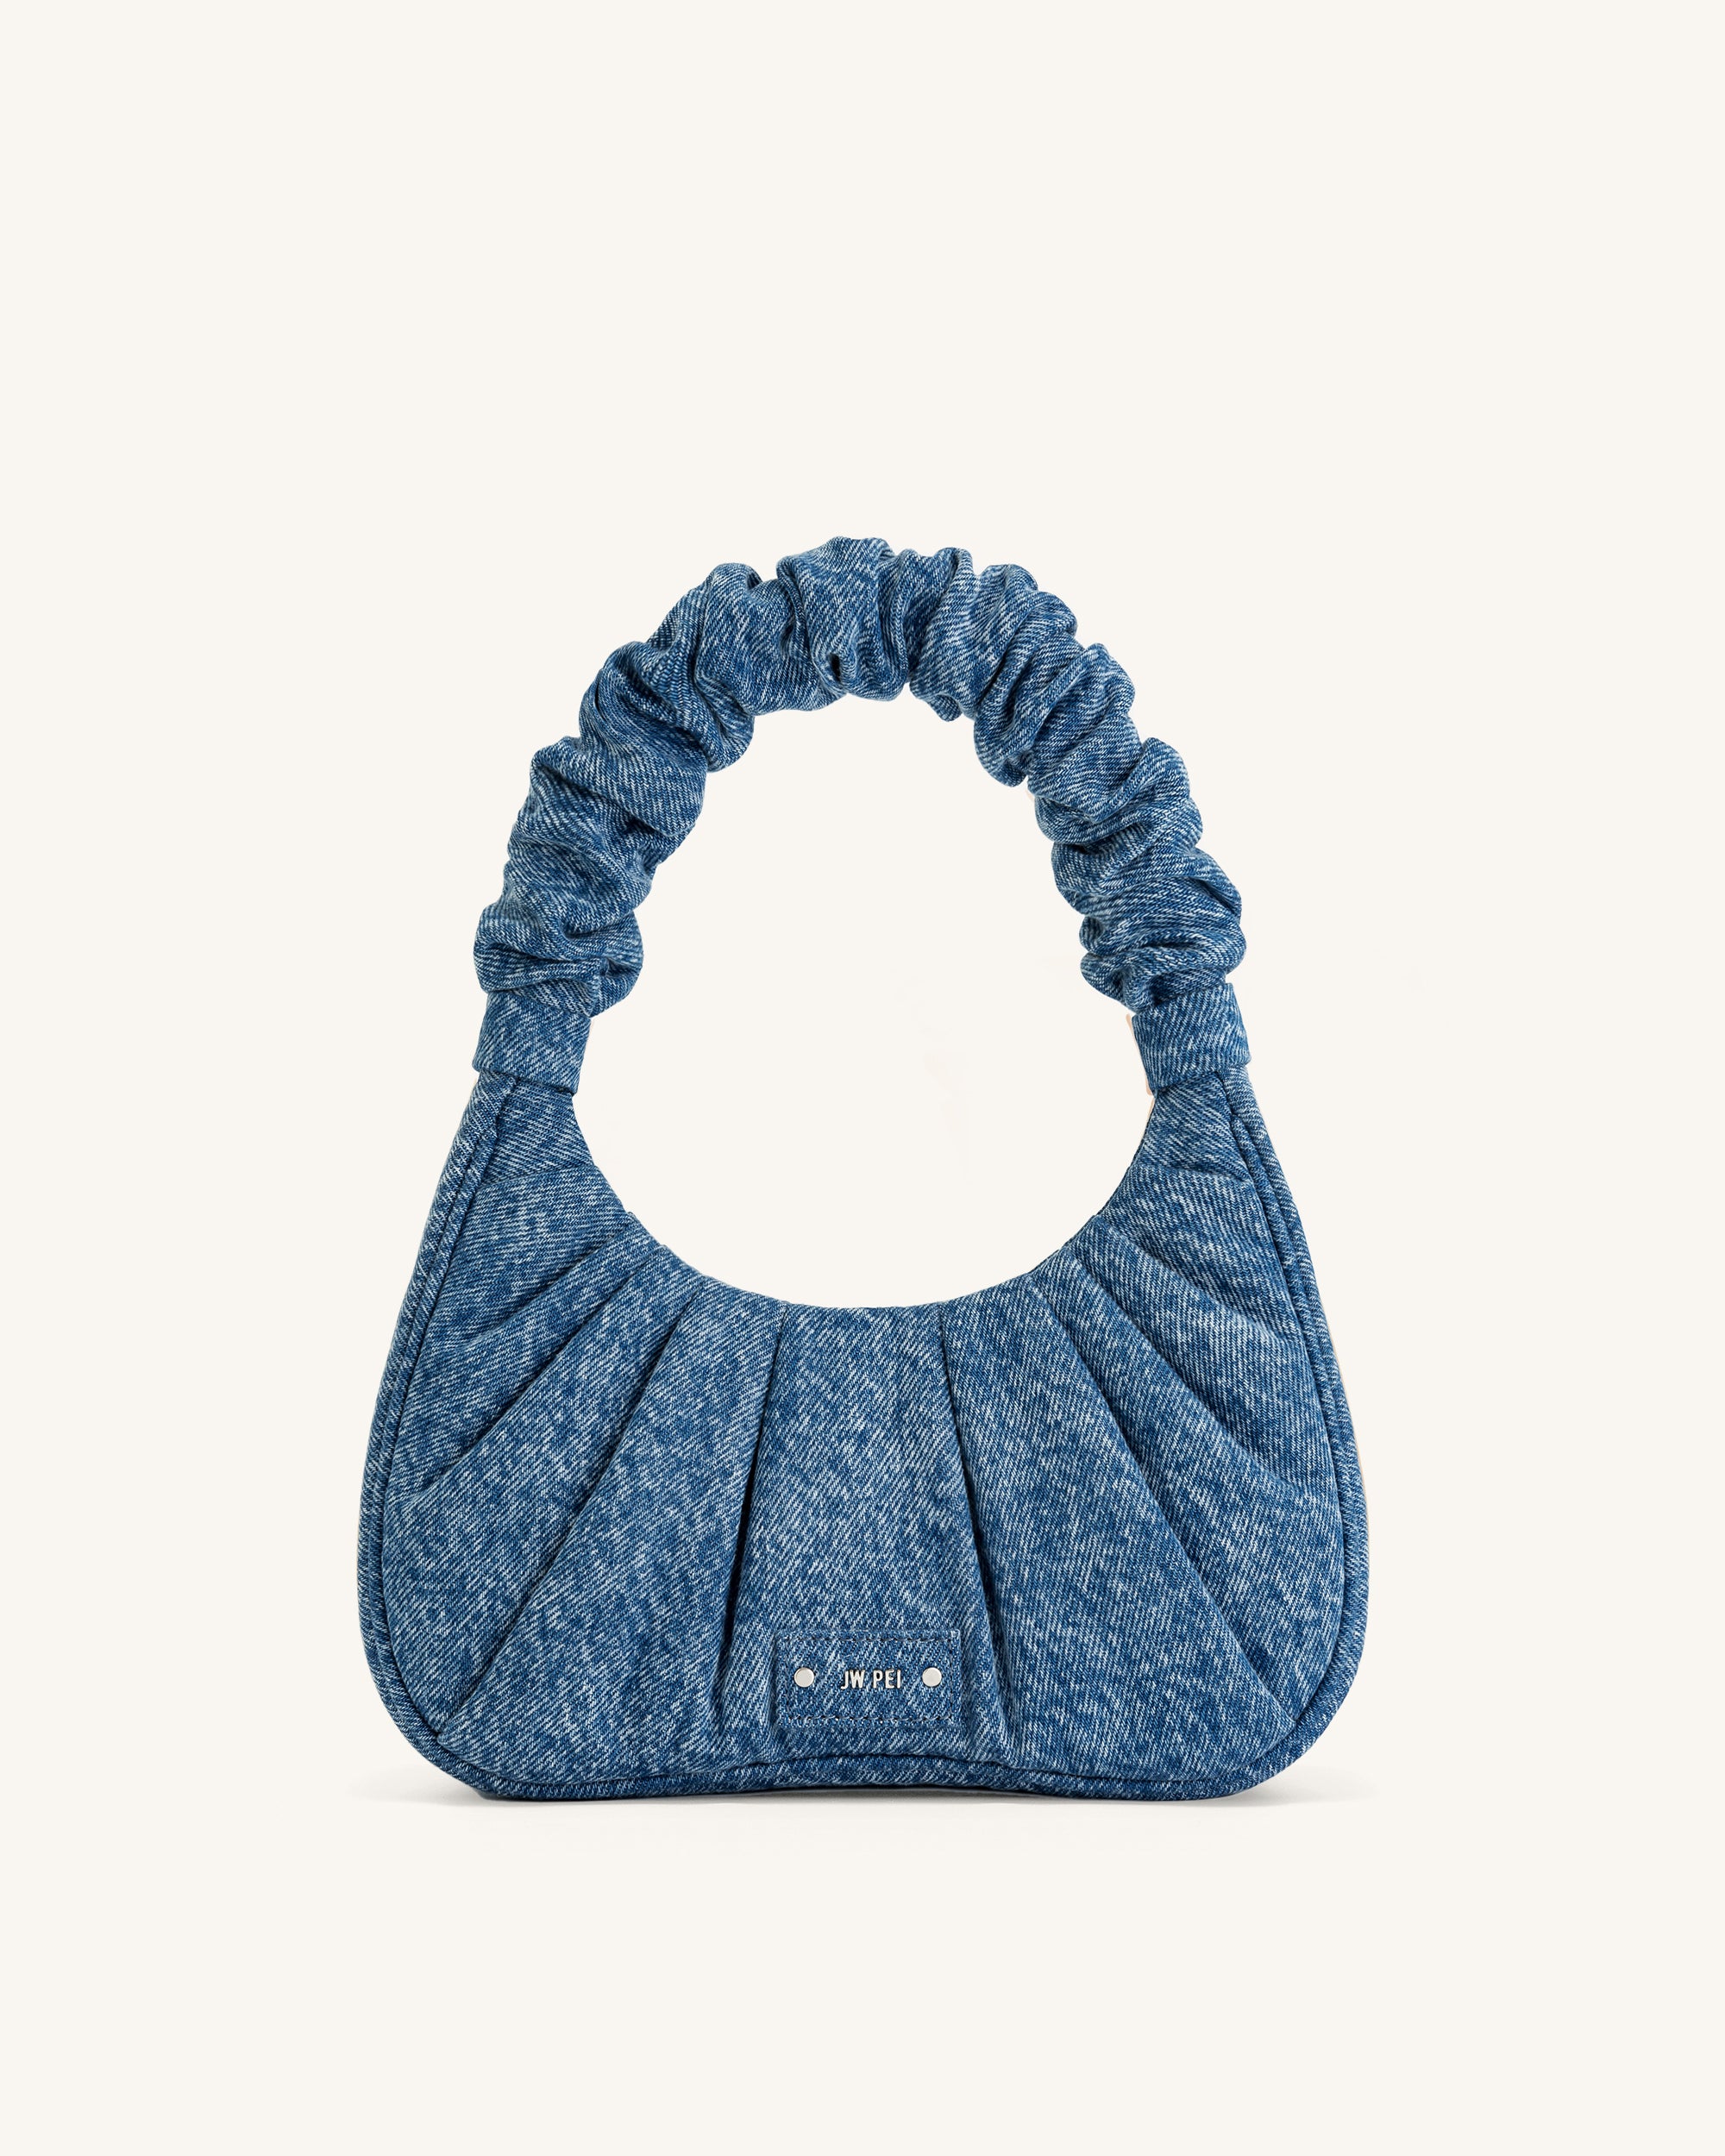 Gabbi Denim Ruched Hobo Handbag - Blue Online Shopping - JW Pei